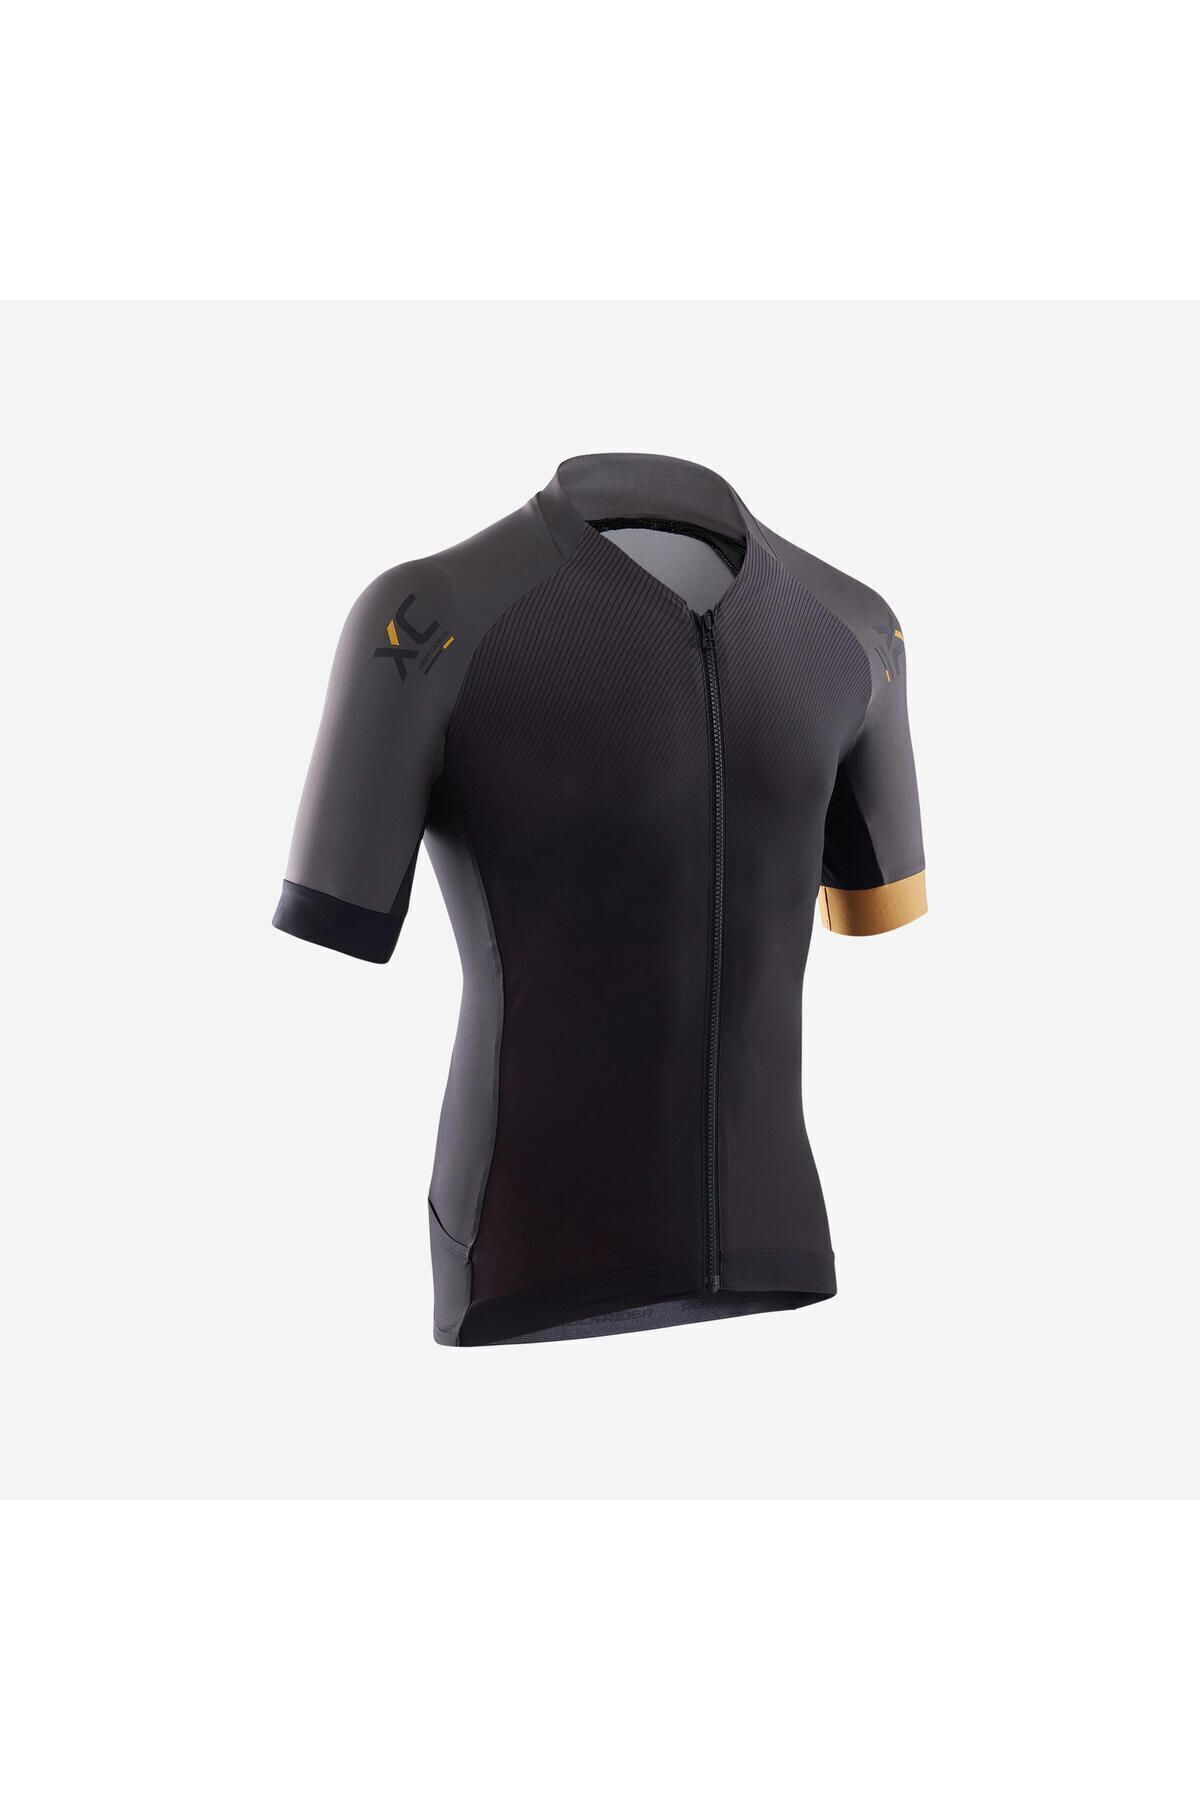 Decathlon Erkek Dağ Bisikleti / Cross Country (XC) Forması - Siyah / Hardal Rengi